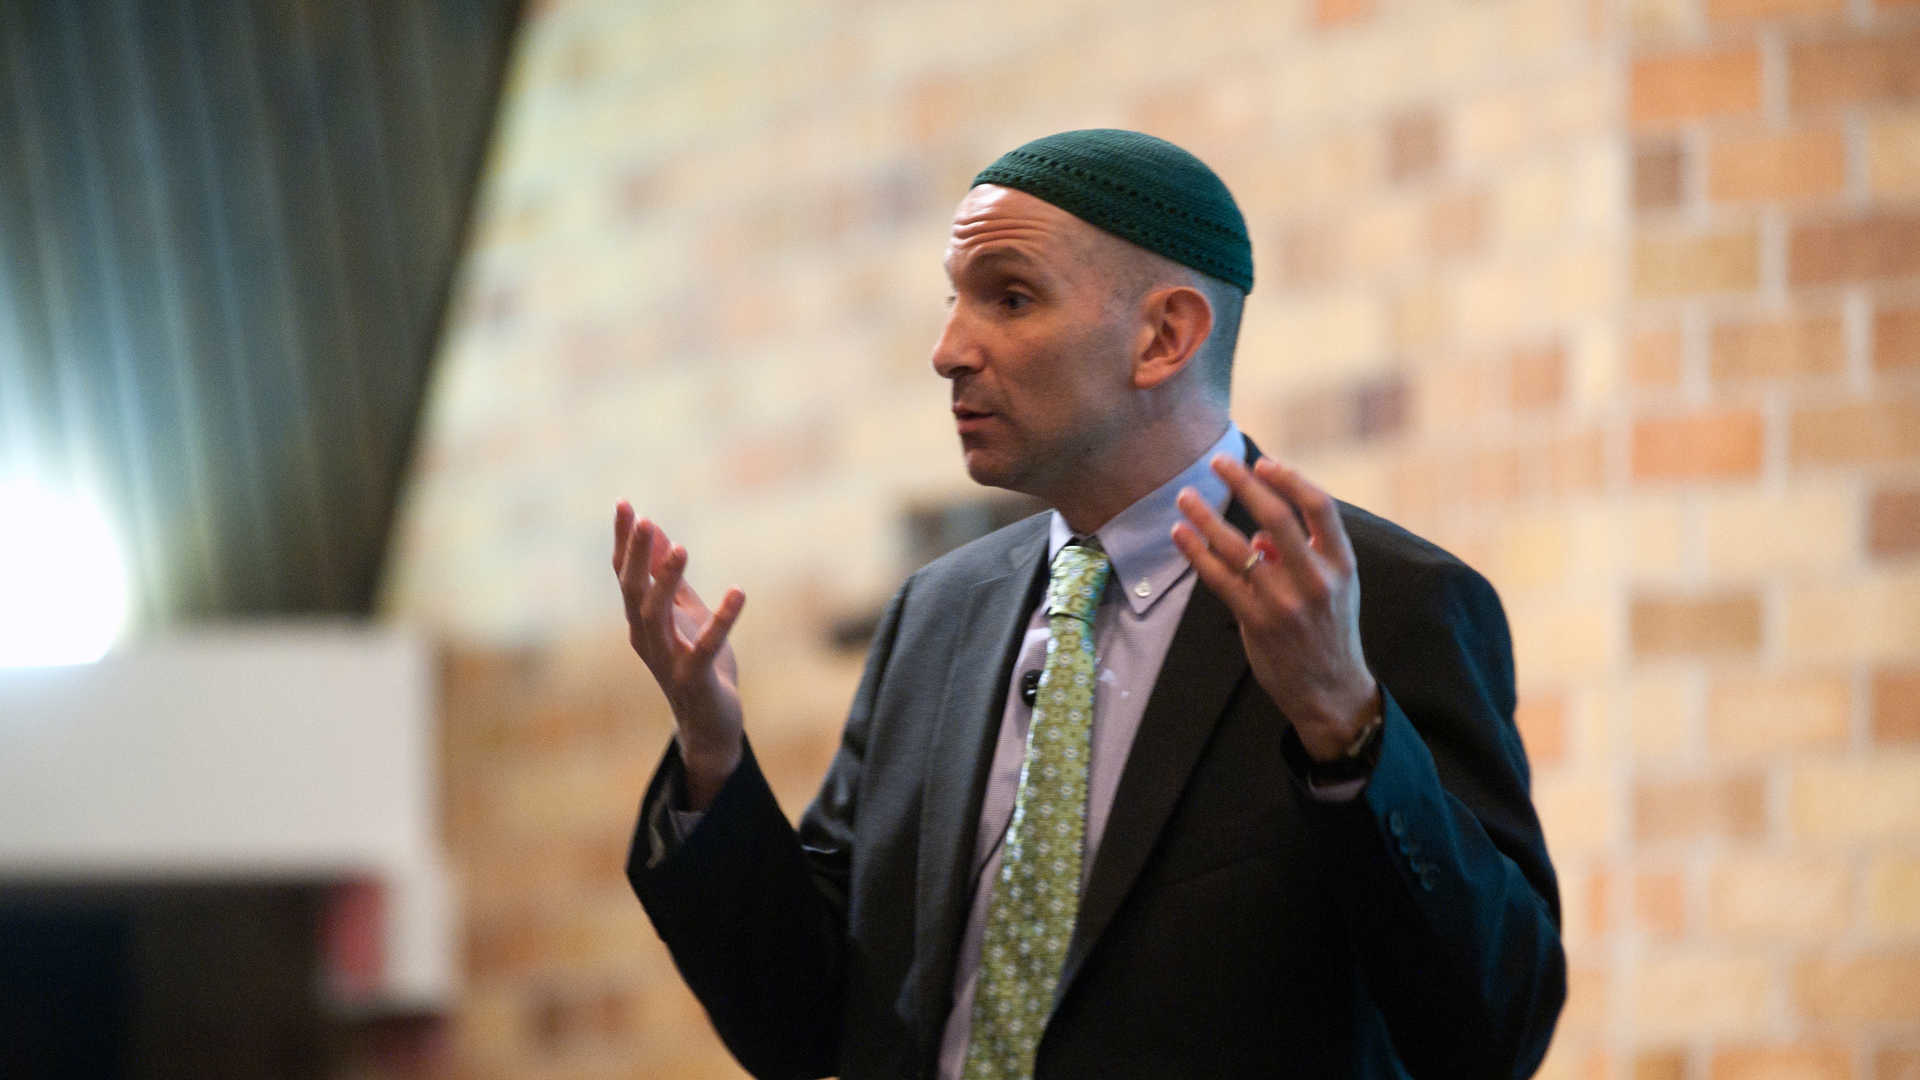 Rabbi Will Berkowitz speaks at an event.